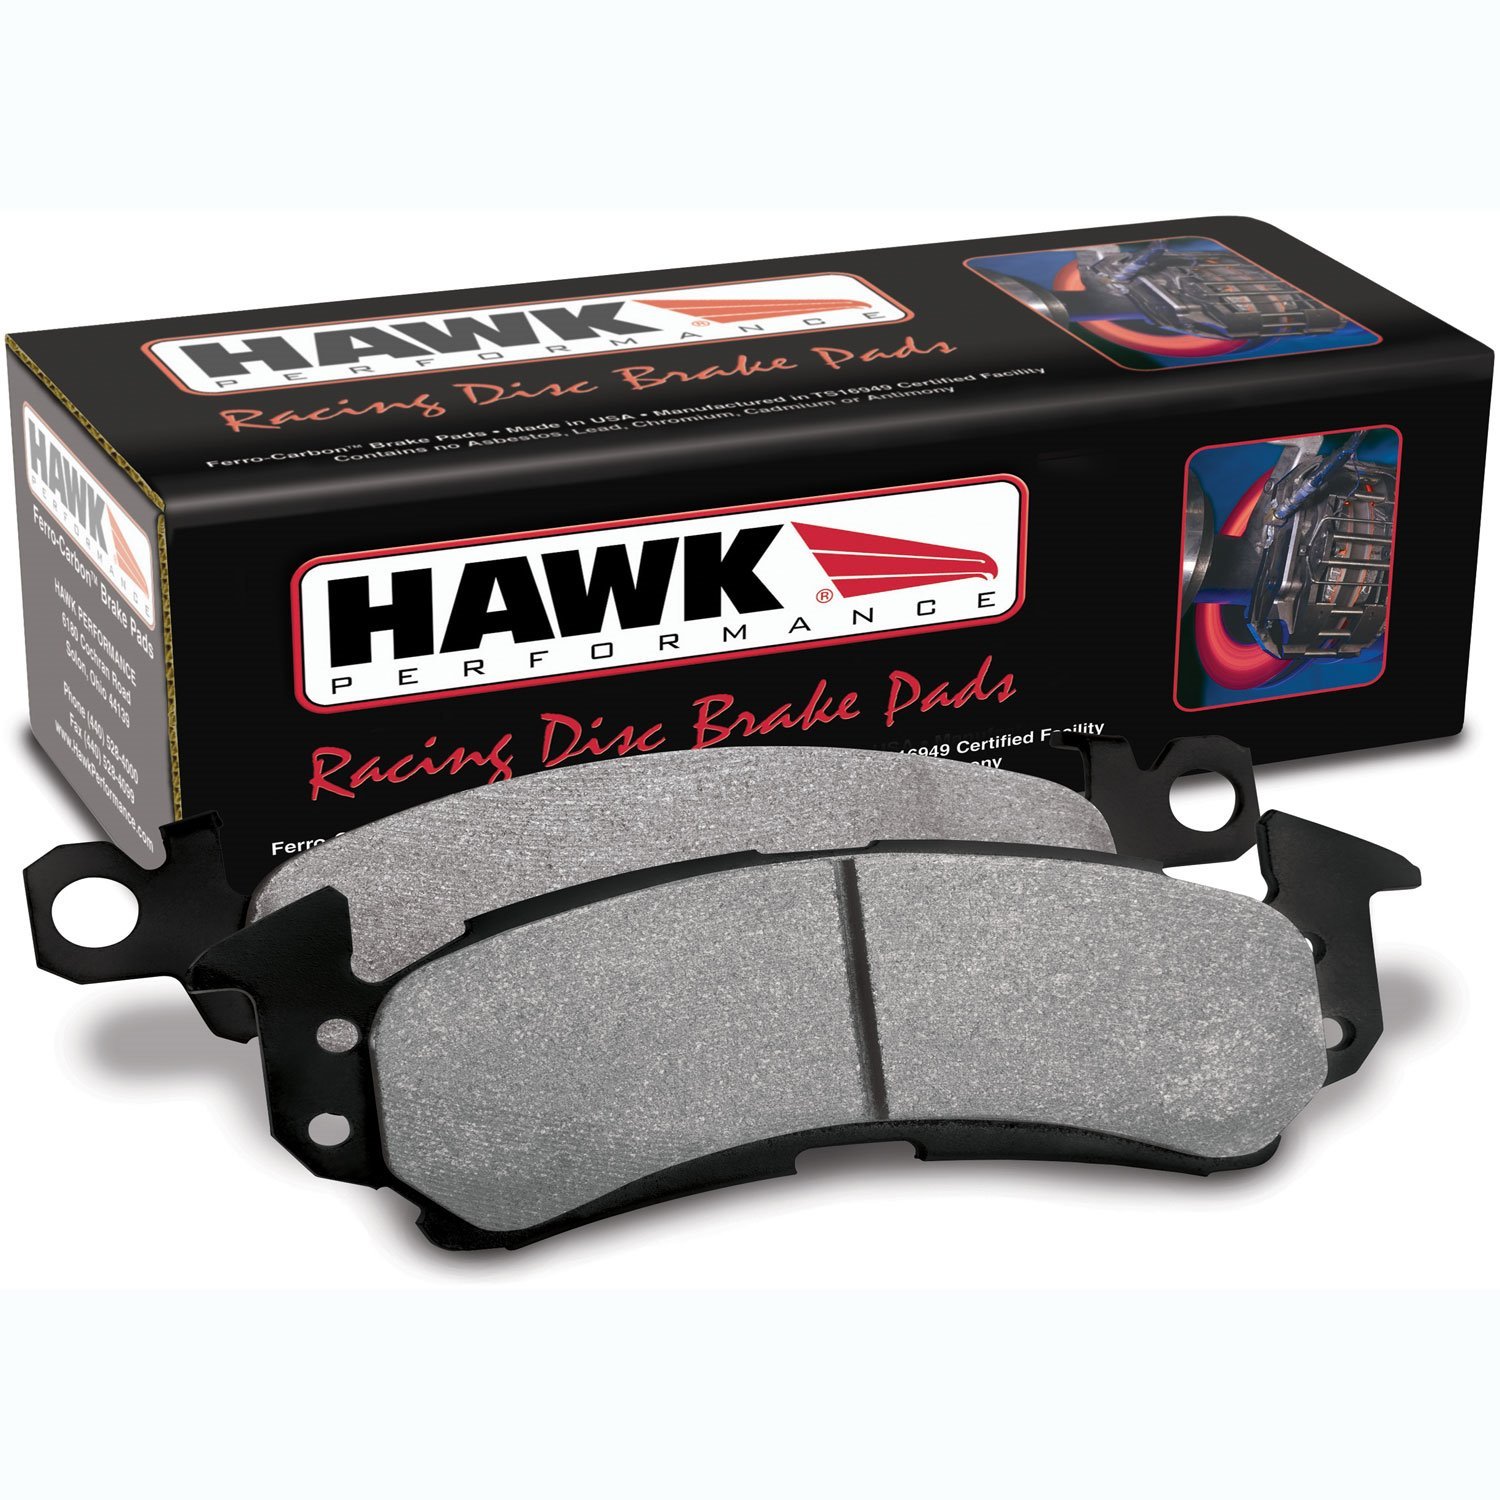 Disc Brake Pad HP Plus w/0.636 Thickness